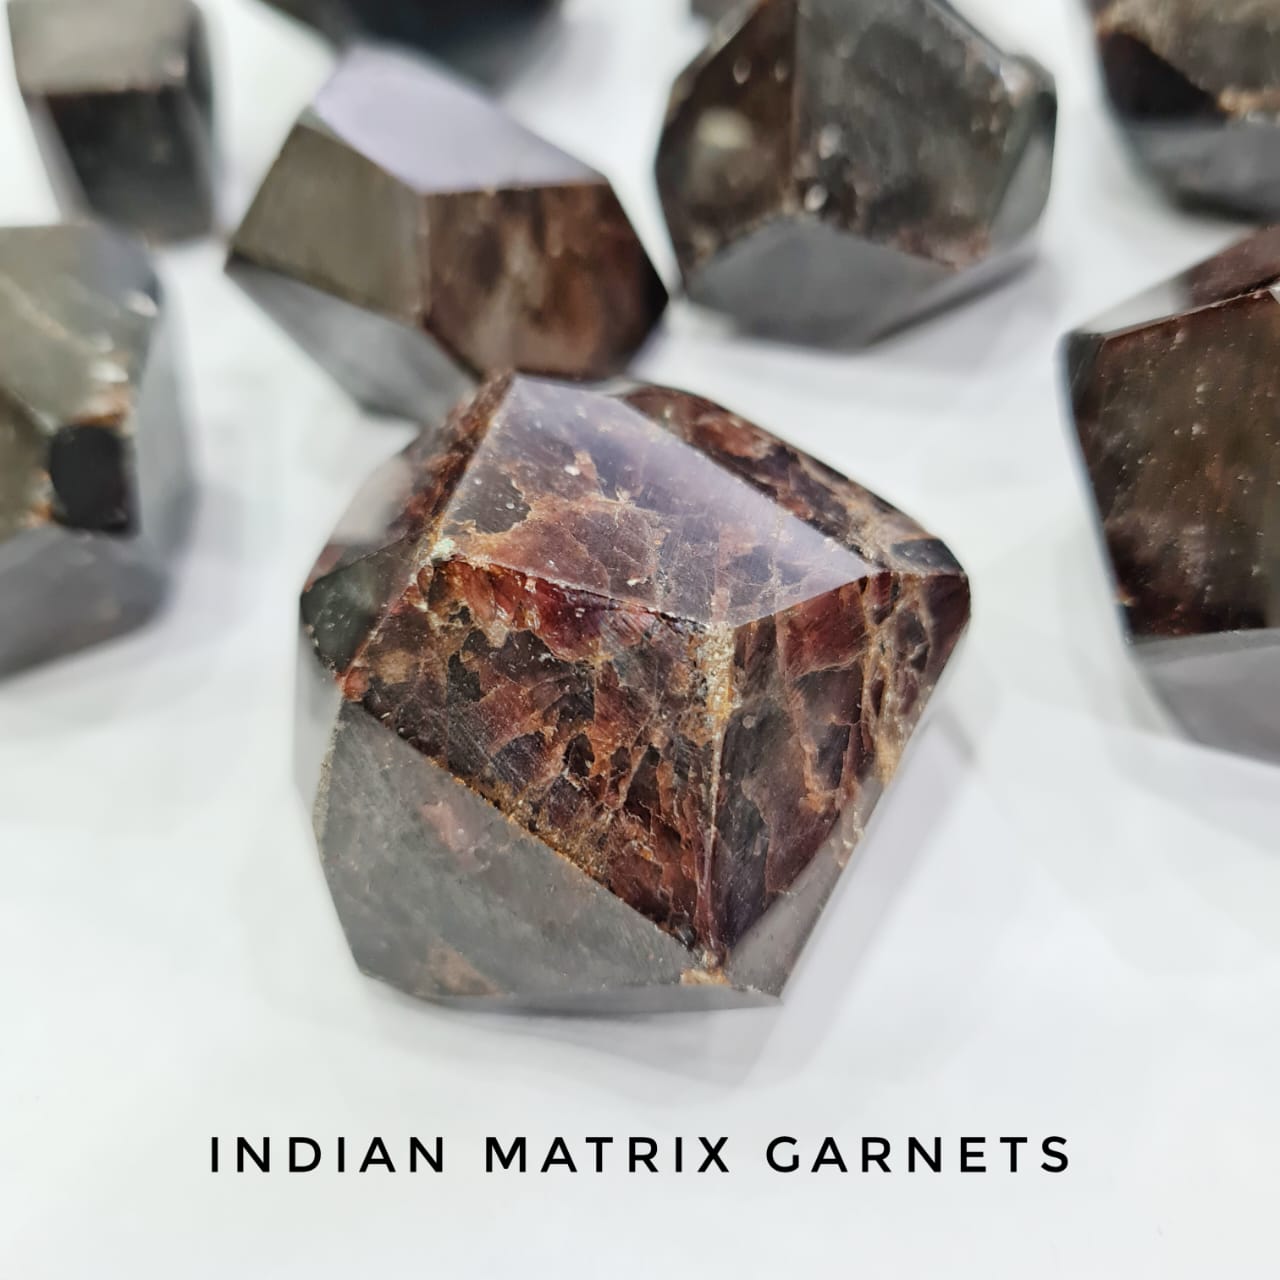 5 Pcs of Indian Garnet Matrix | Rare Pieces  2 Inches - The LabradoriteKing